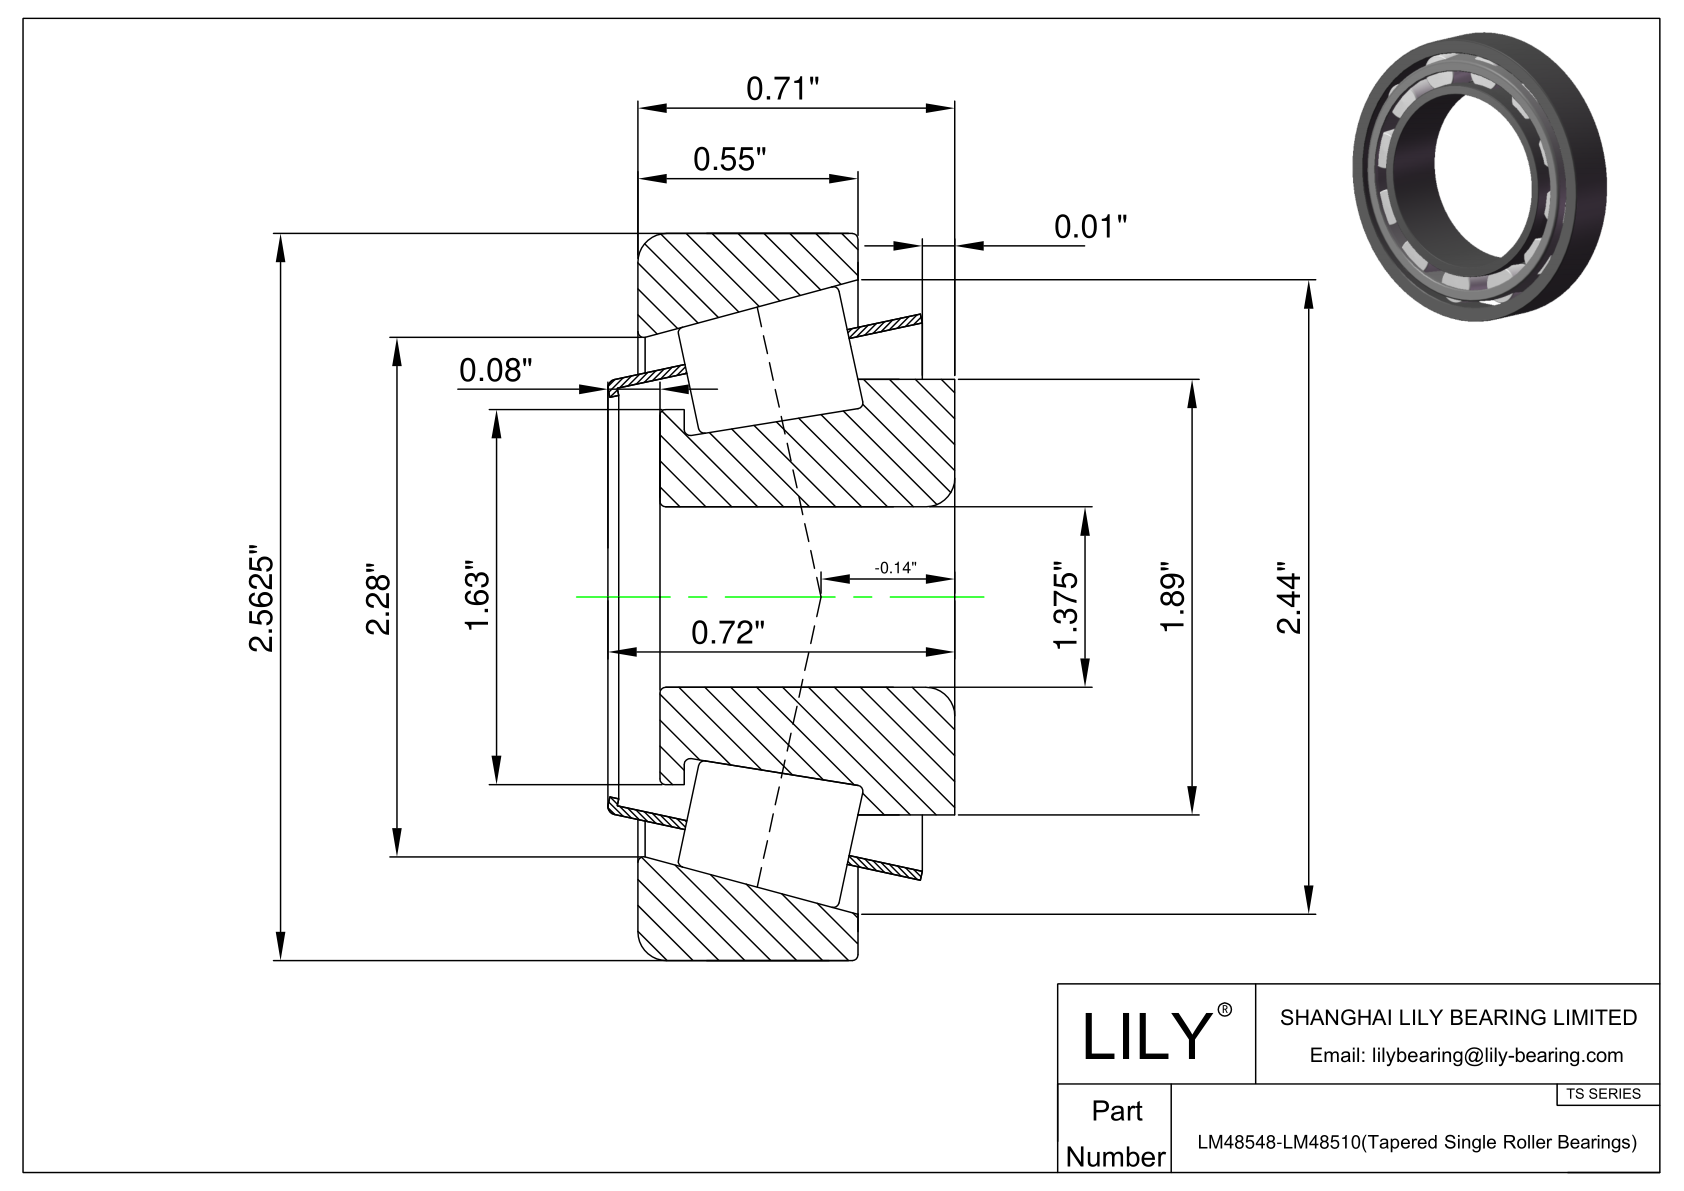 LM48548-LM48510 TS系列(圆锥单滚子轴承)(英制) CAD图形